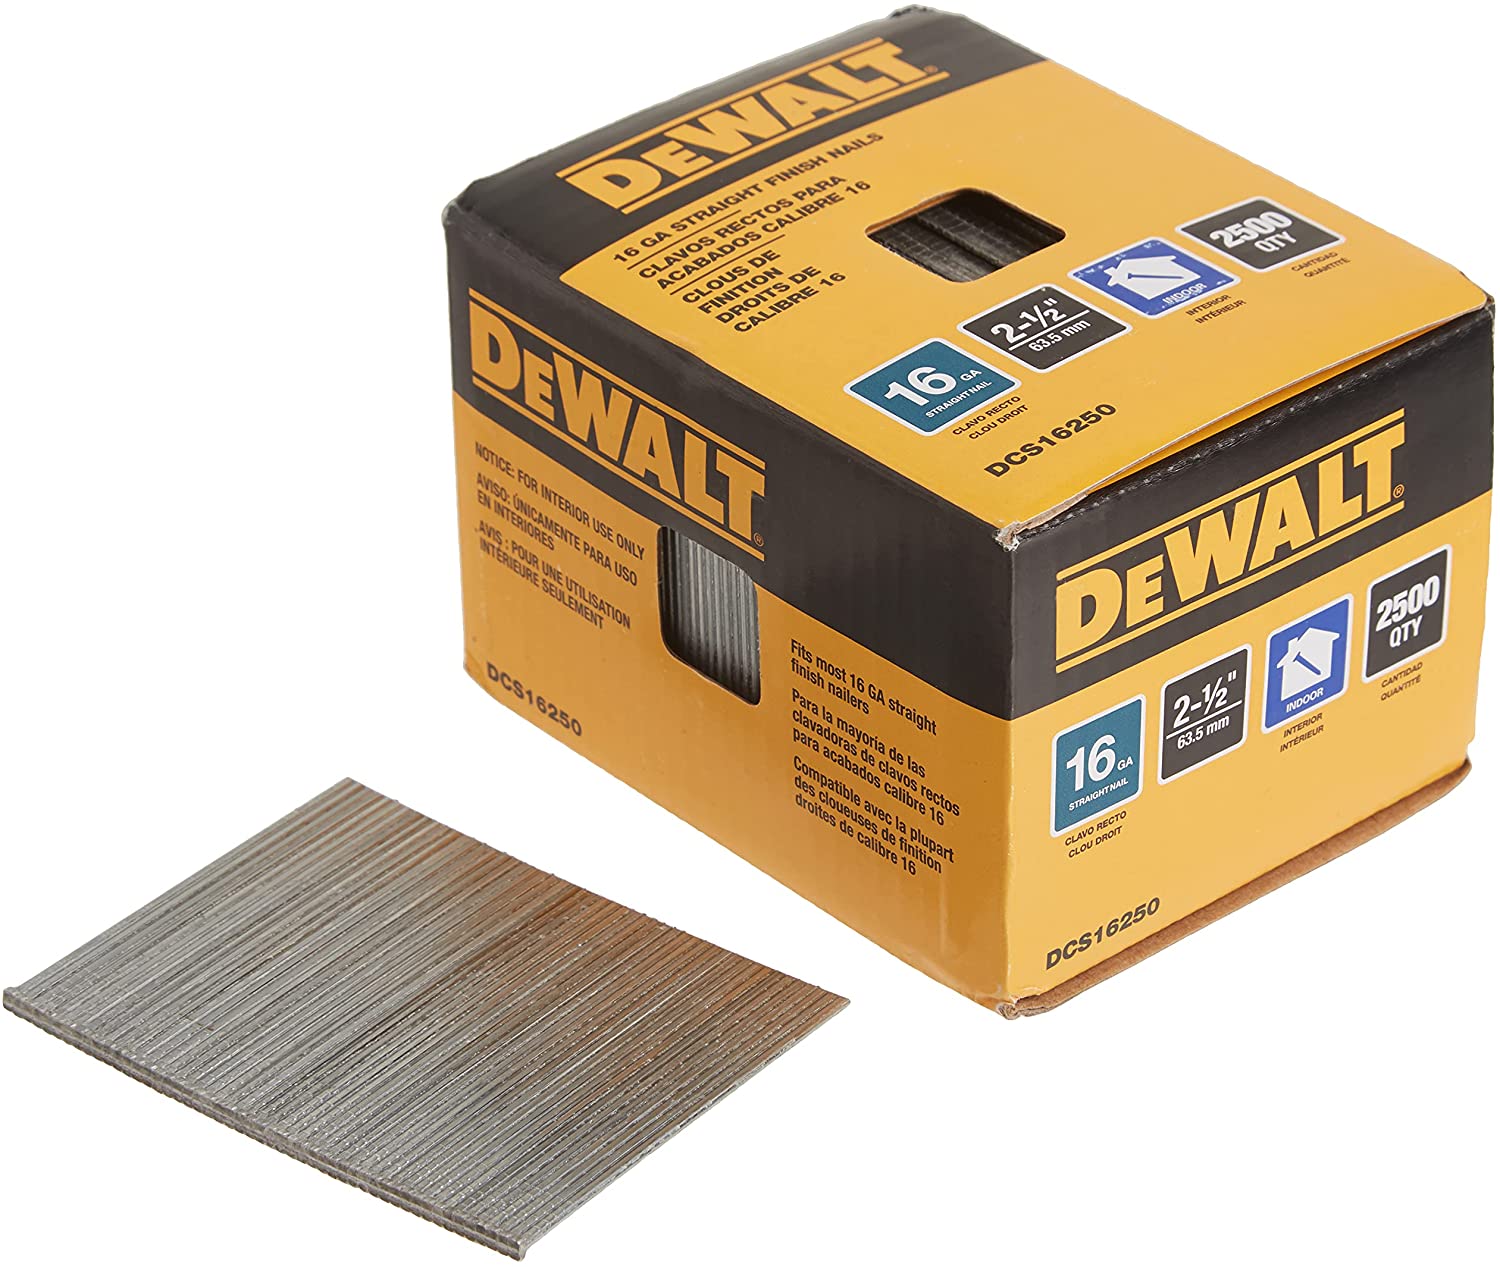 DEWALT Finish Nails, 2-1/2-Inch, 16GA, 2500-Pack (DCS16250) - Collated Finish Nails - Amazon.com $15.97